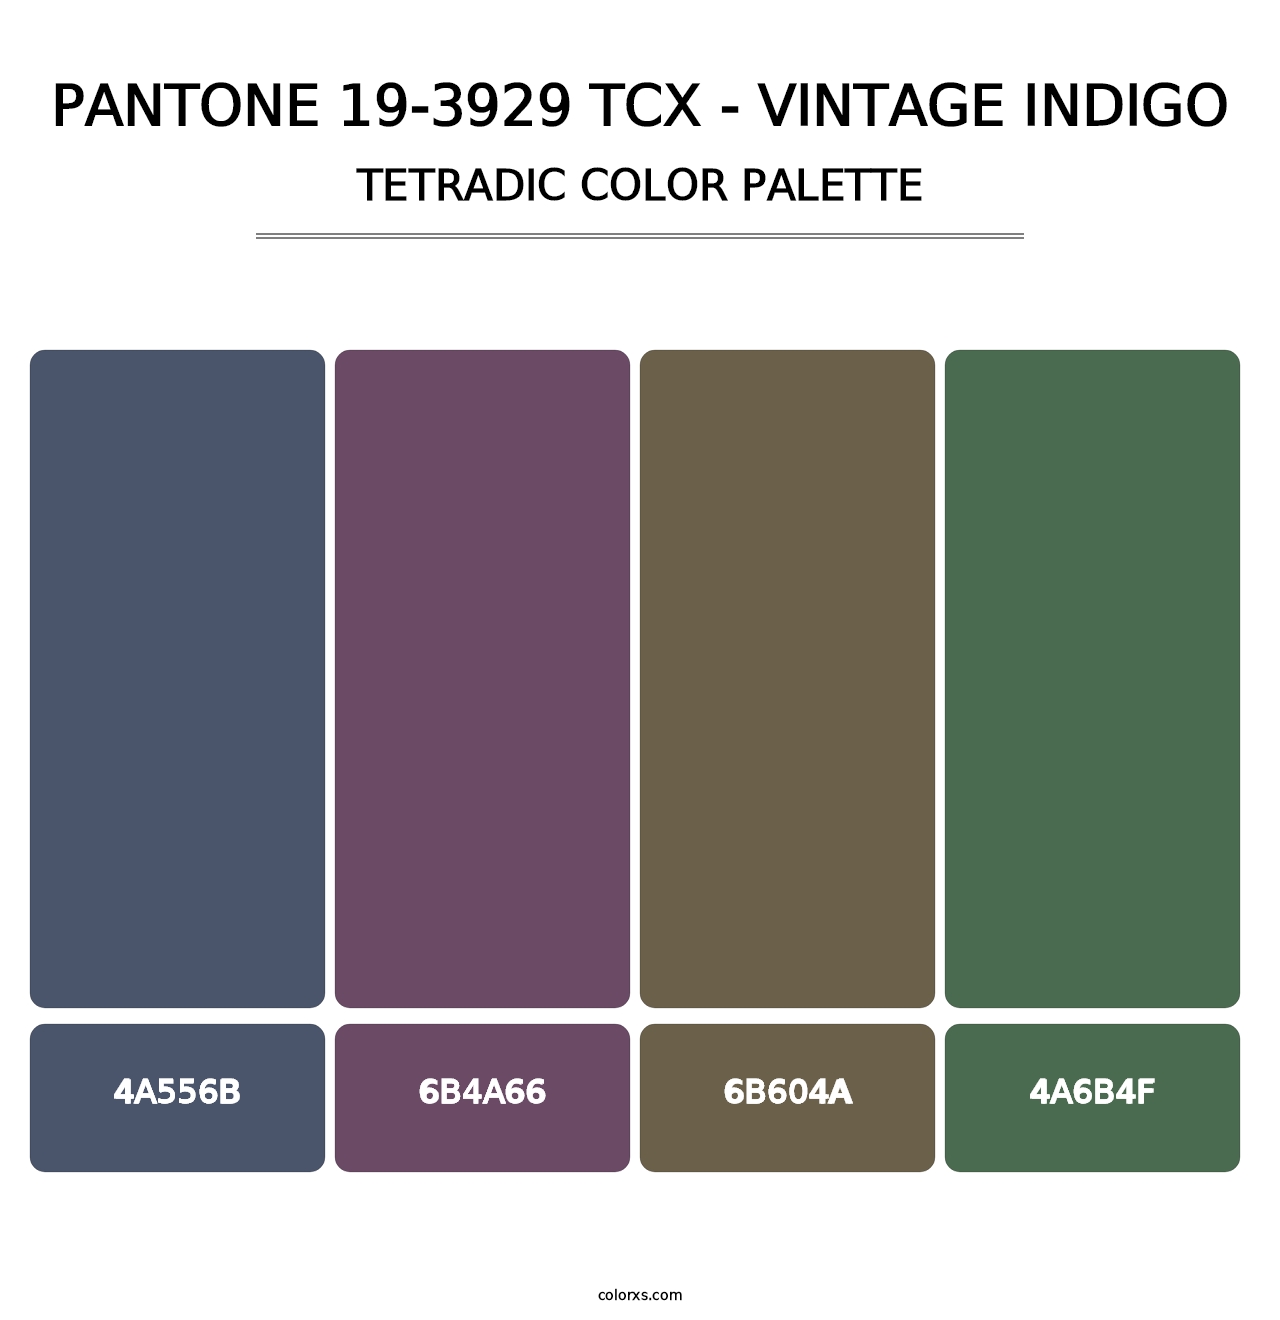 PANTONE 19-3929 TCX - Vintage Indigo - Tetradic Color Palette